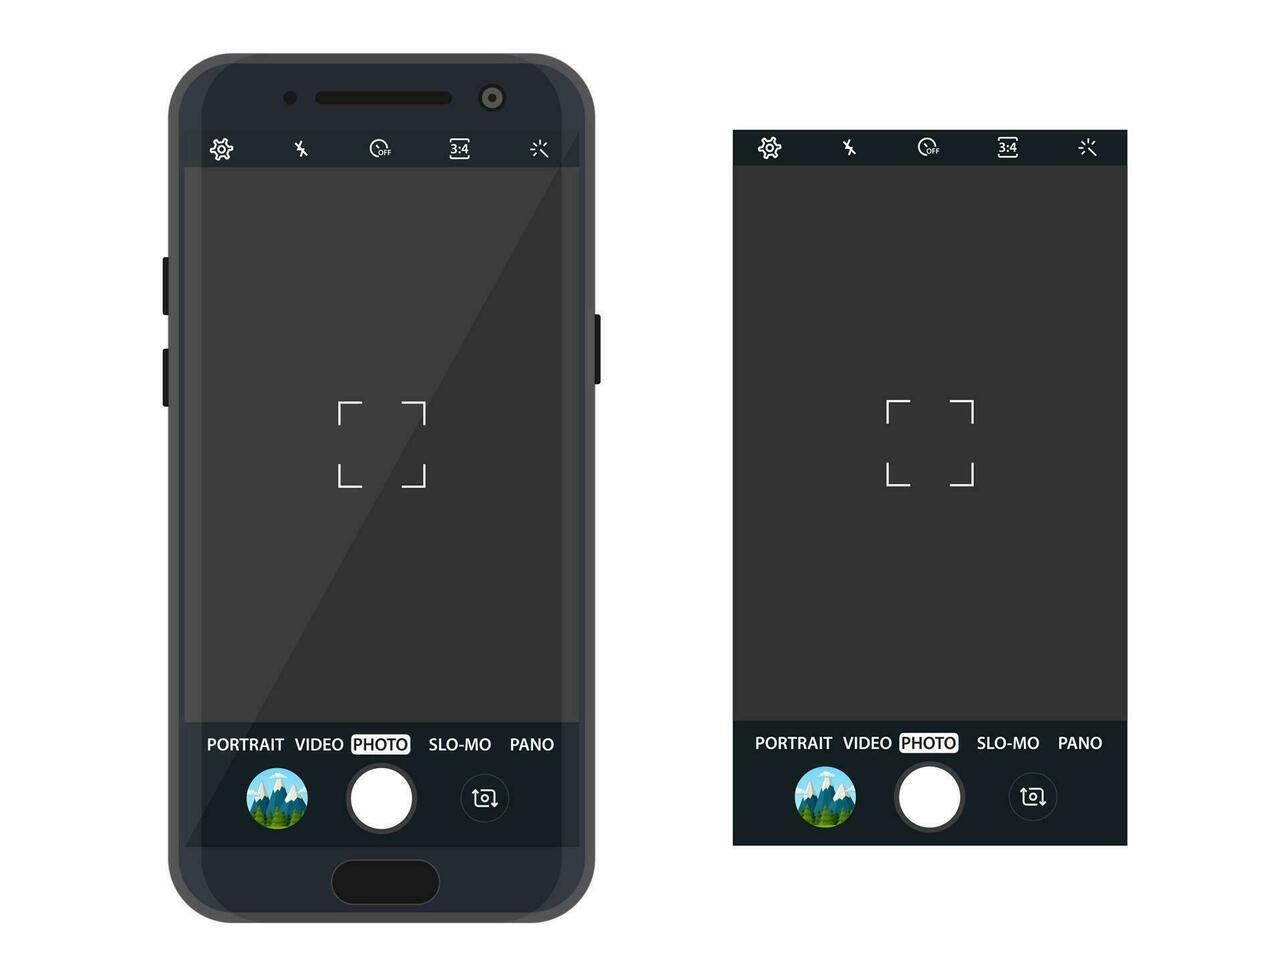 moderno teléfono inteligente con cámara solicitud. usuario interfaz de cámara visor. enfoque pantalla en grabación tiempo. vector ilustración plano estilo